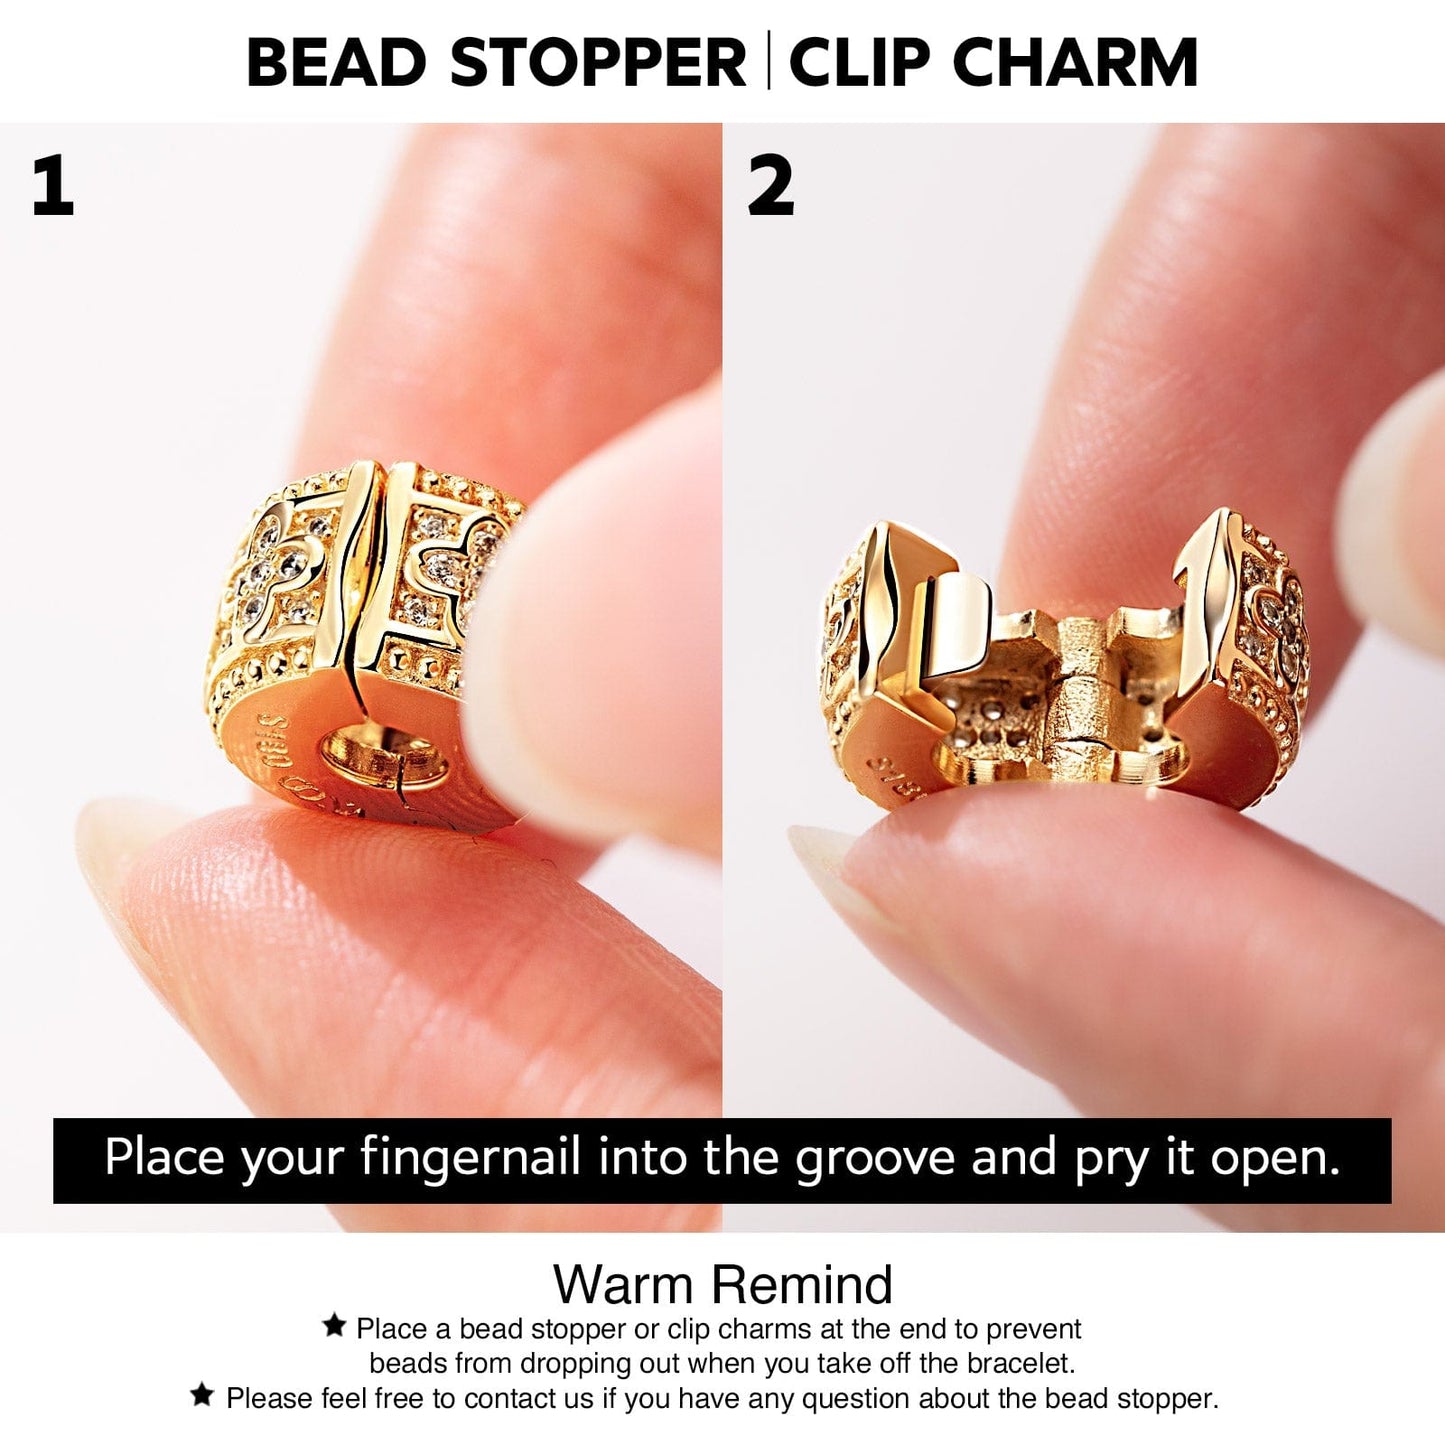 Sterling Silver Crimson Floral Charms Bracelet Set With Enamel In 14K Gold Plated